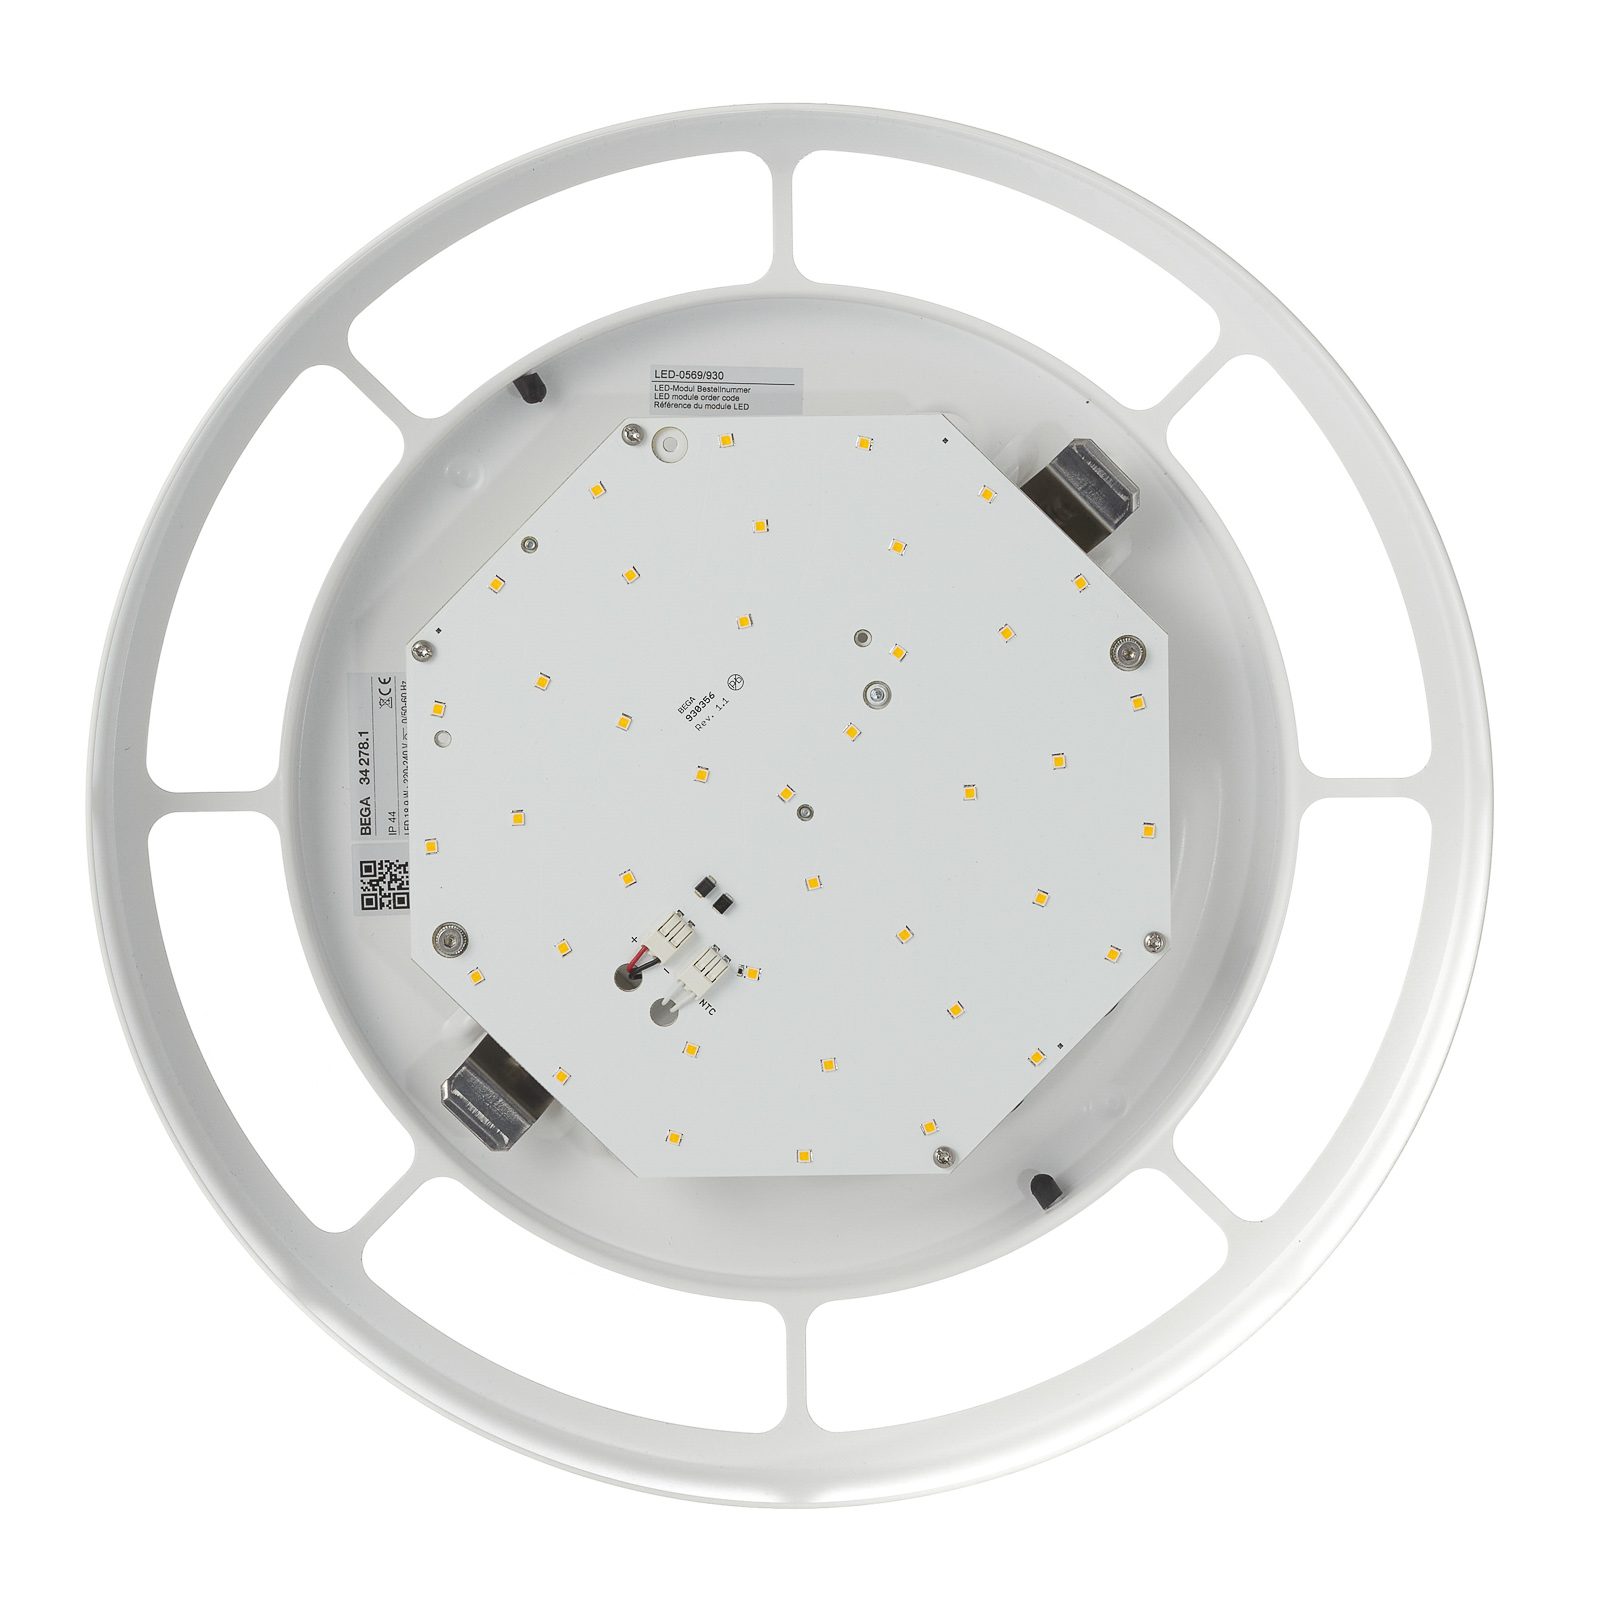 BEGA 34278 LED-loftlampe, hvid, Ø 36 cm, DALI